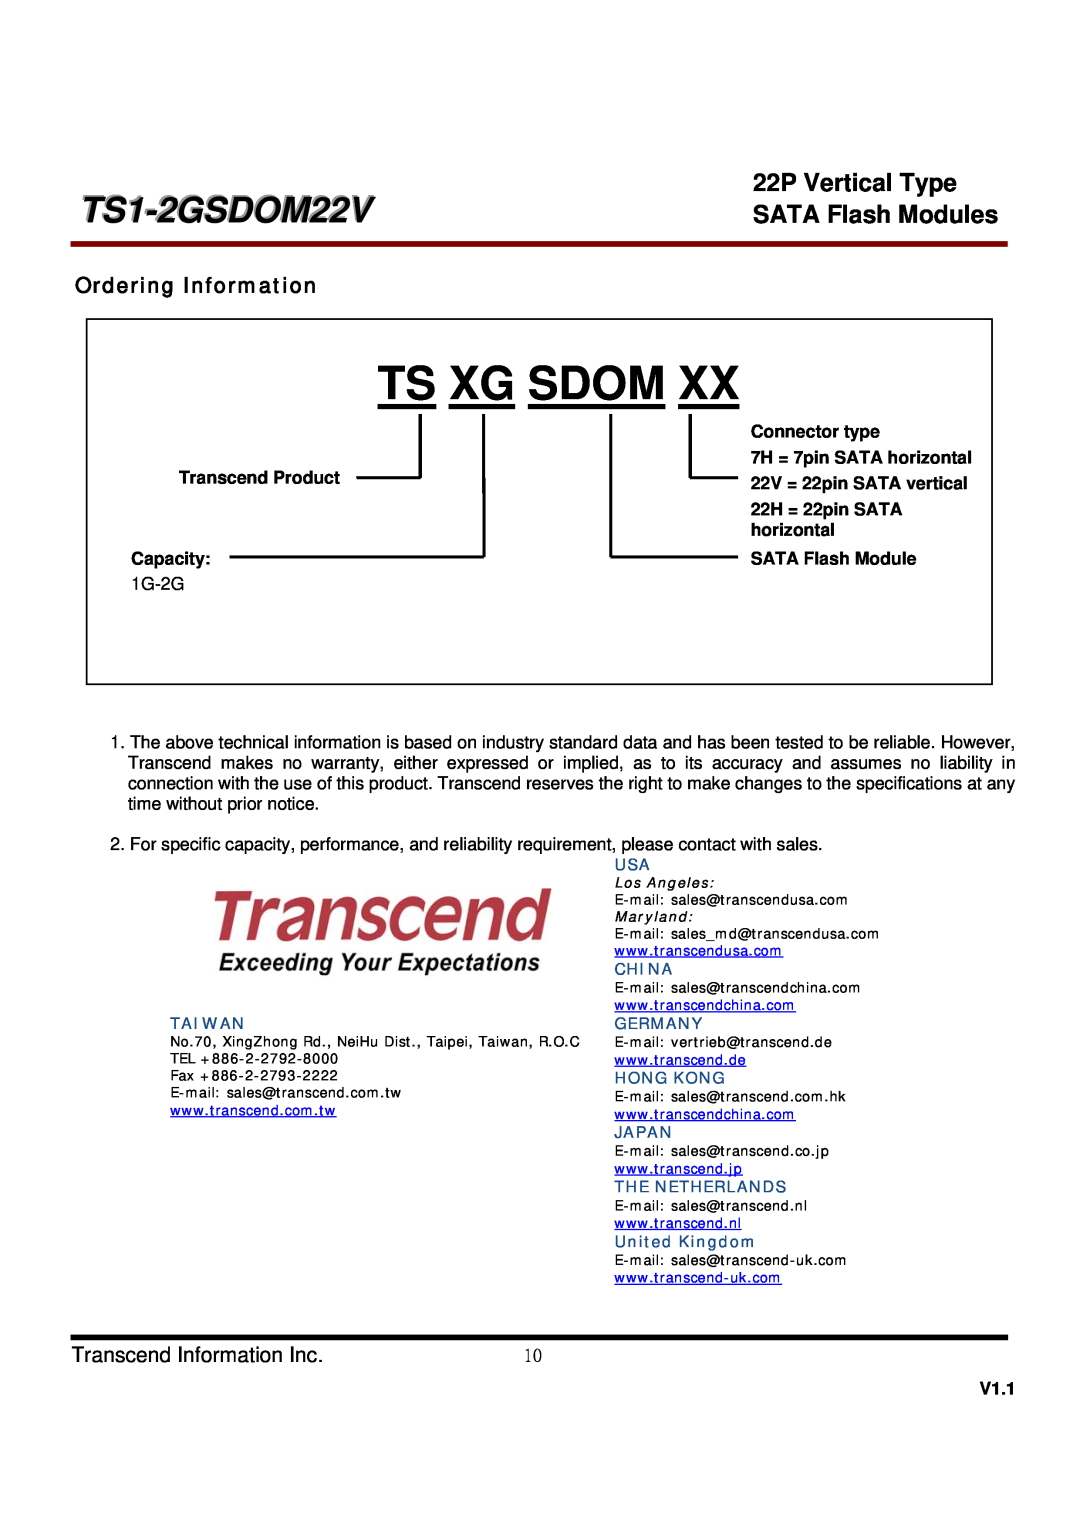 Transcend Information TS2GSDOM22V Ordering Information, Ts Xg Sdom, TS1-2GSDOM22V, 22P Vertical Type, SATA Flash Modules 